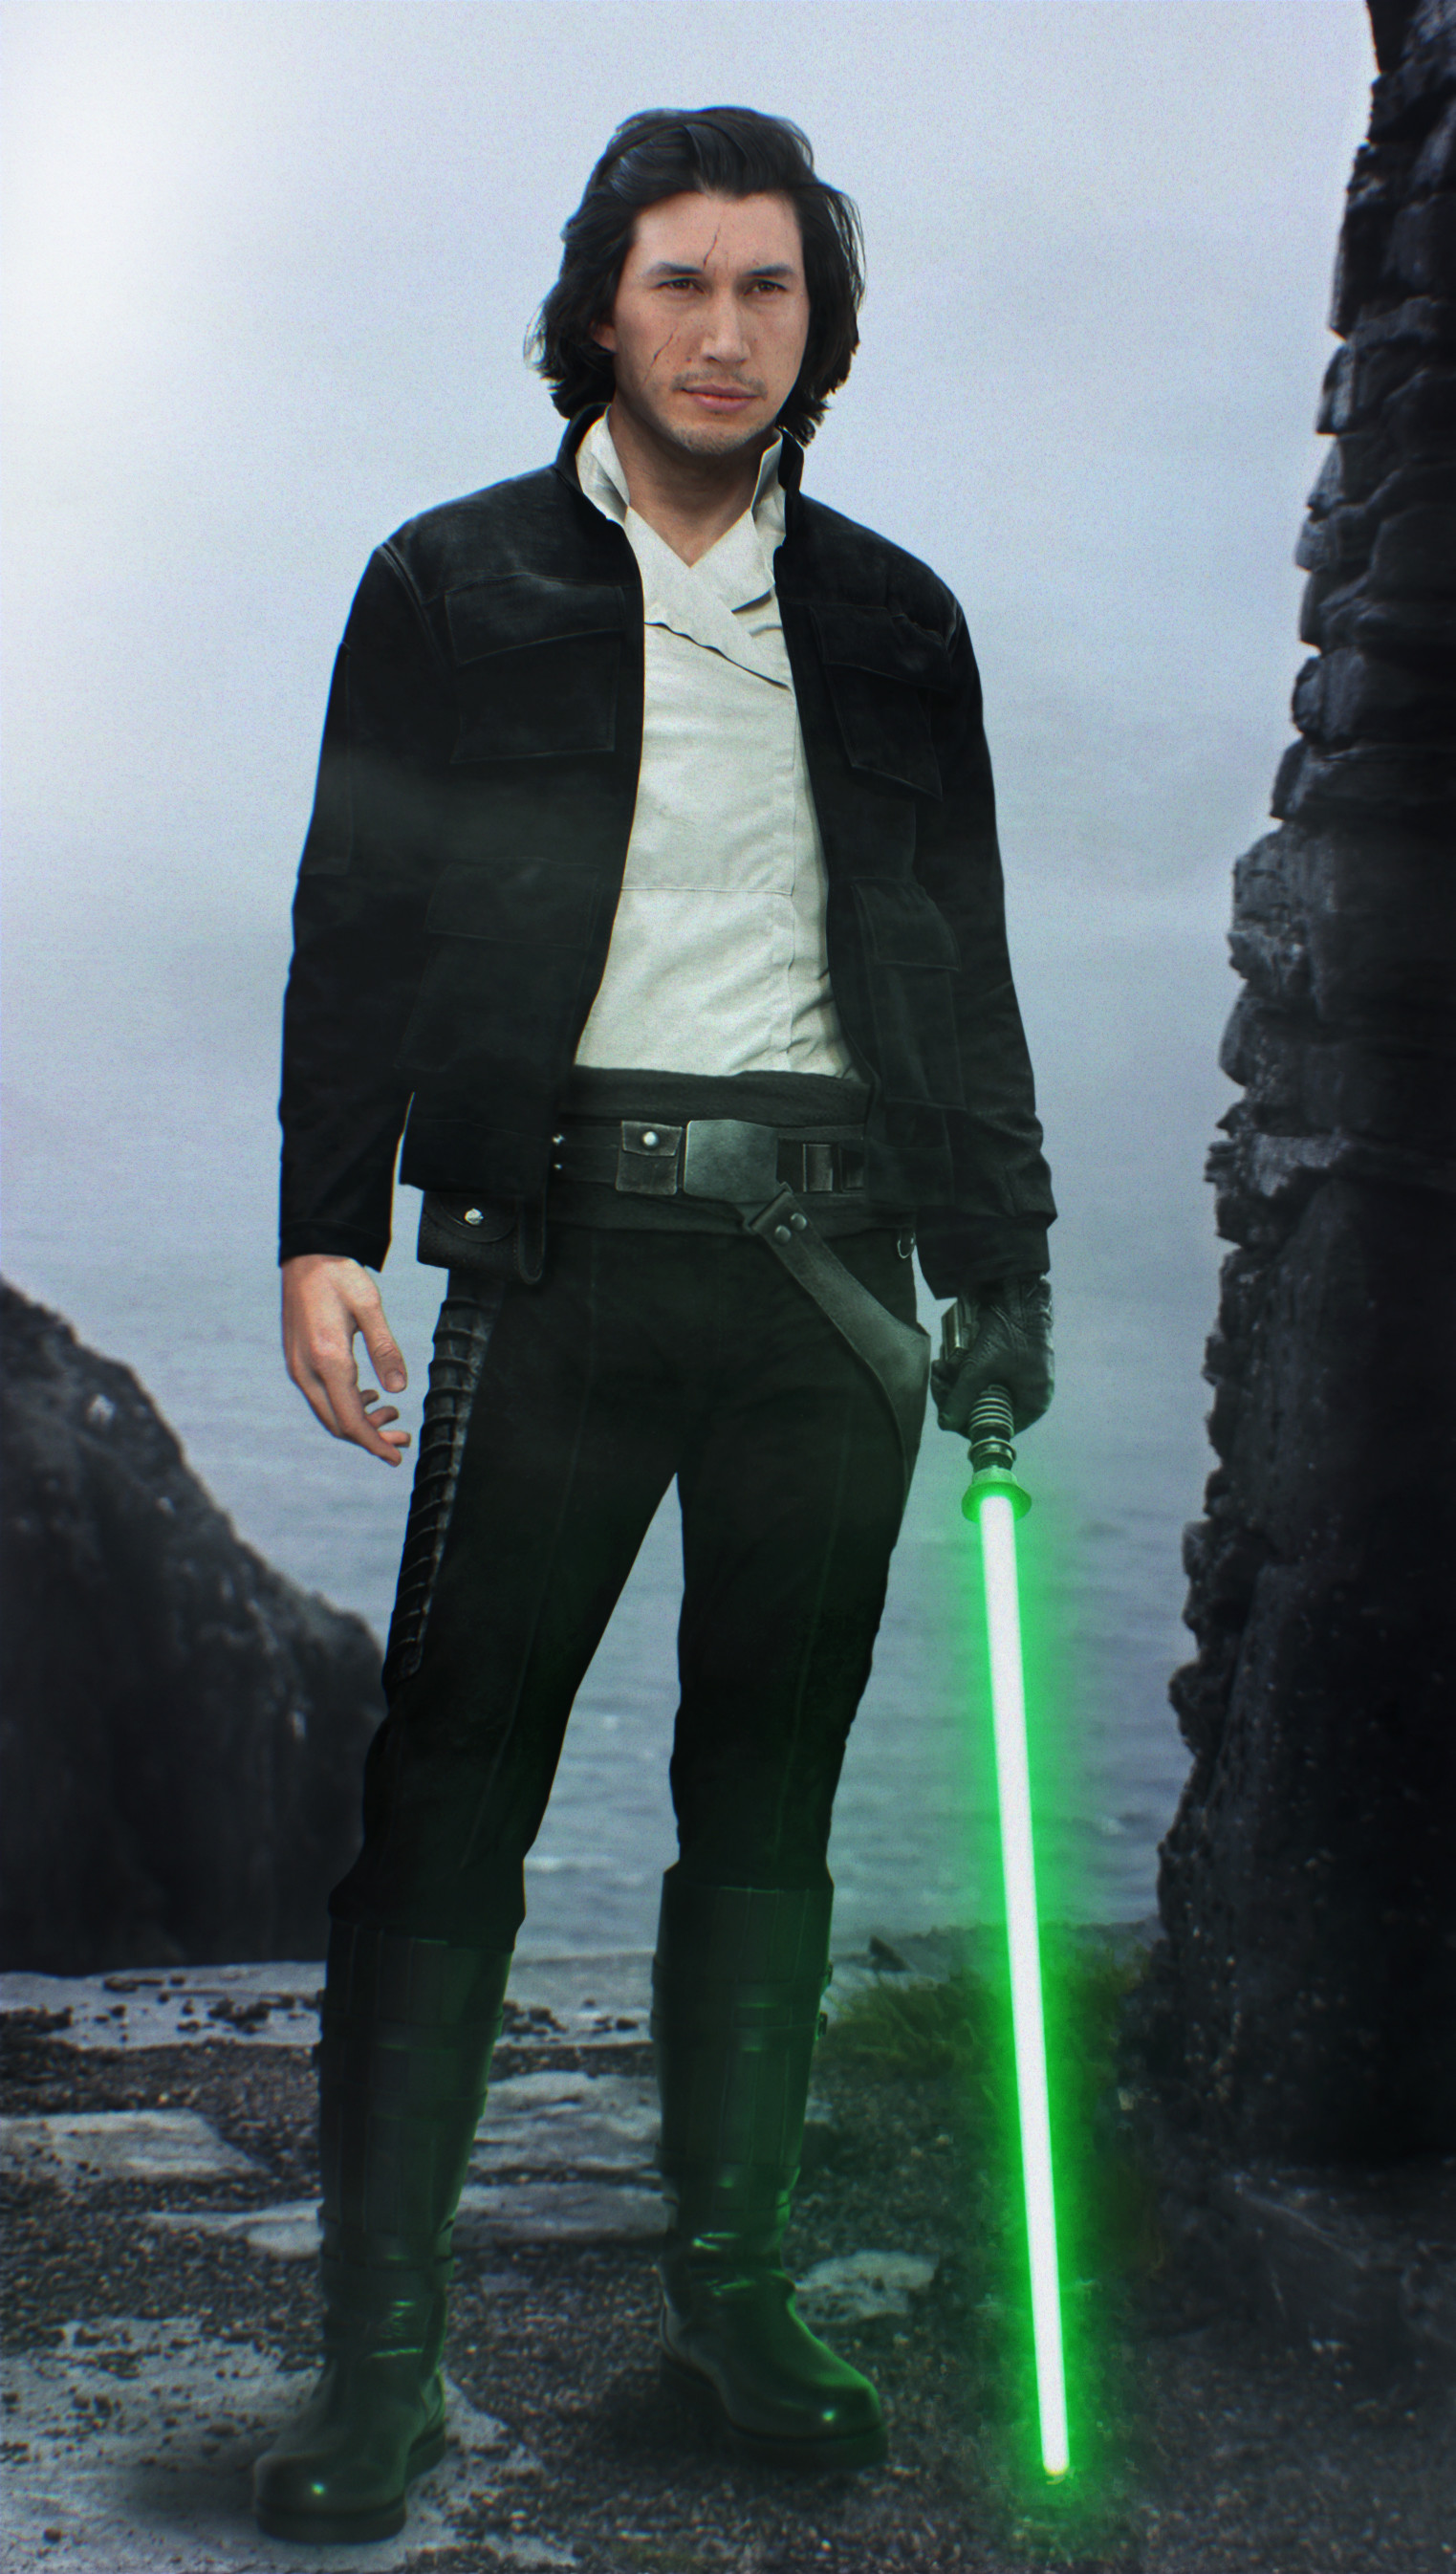 Ben Solo : StarWars